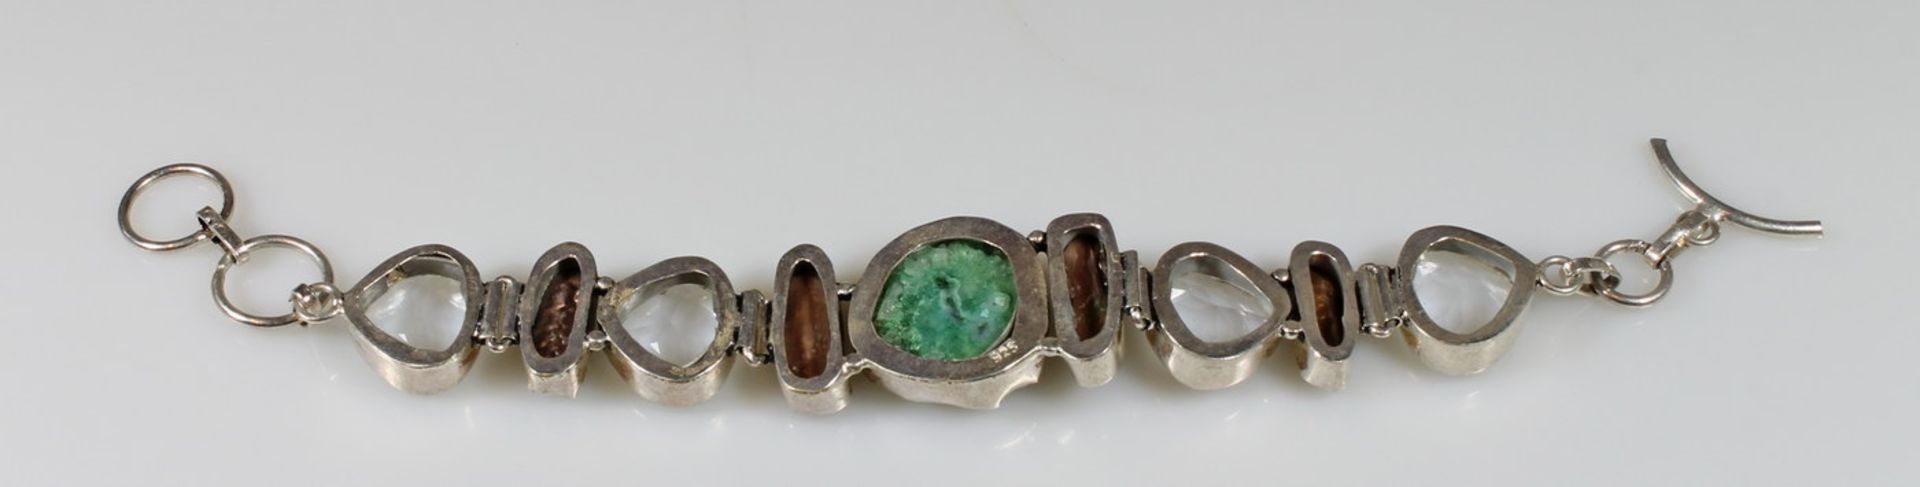 Armband, Silber 925, Achat, Biwa-Perlen, Kristall, 20 cm lang, 28 g